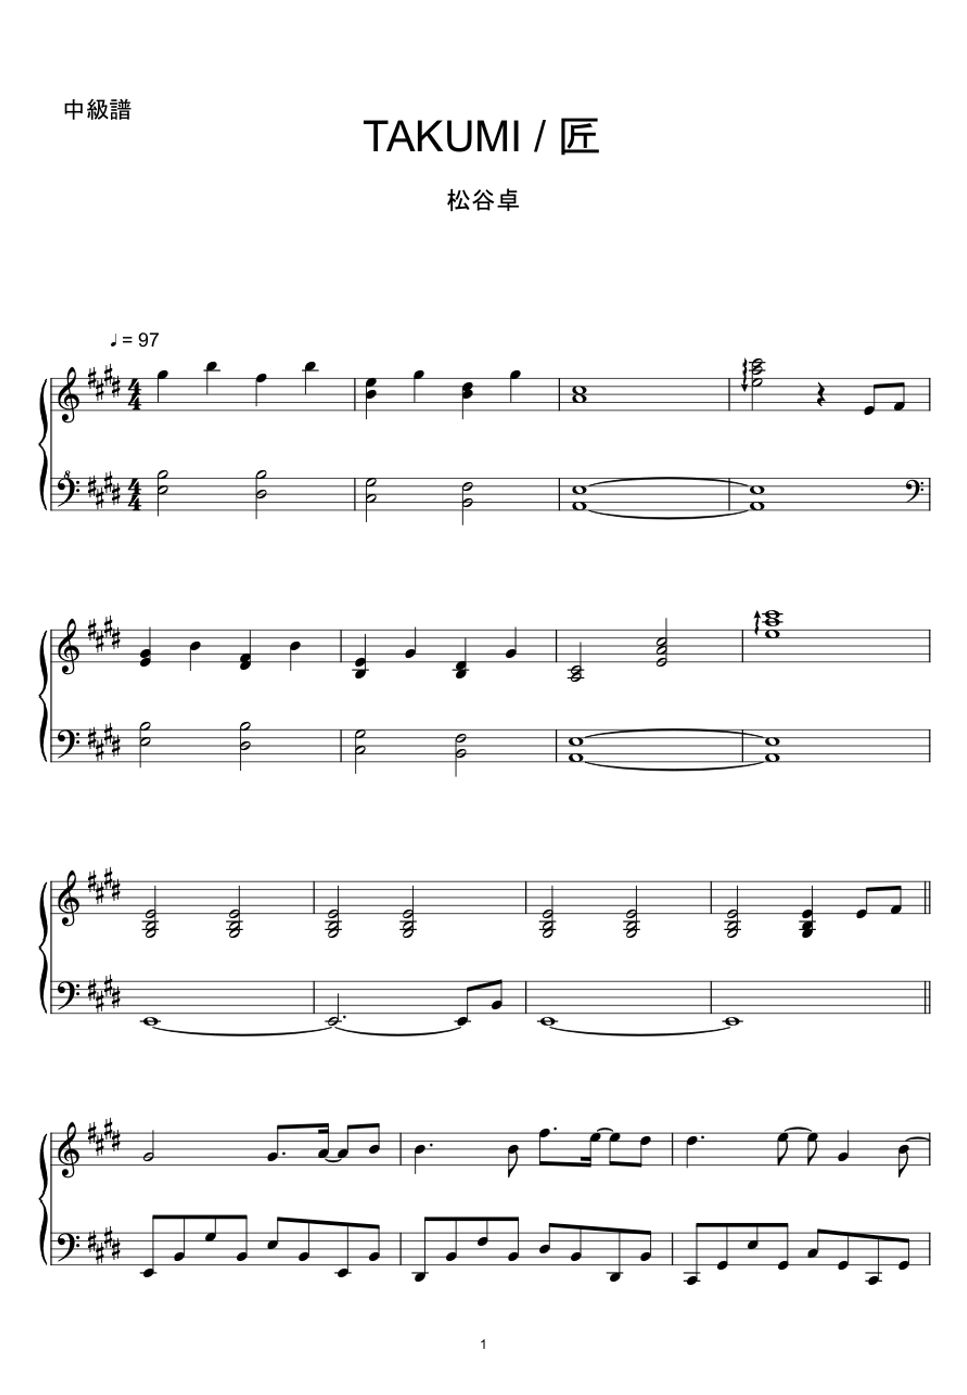 Matsutani Suguru / 松谷卓 - TAKUMI / 匠 【中級】 (楽譜, Sheet Music, MIDI,) by sayu